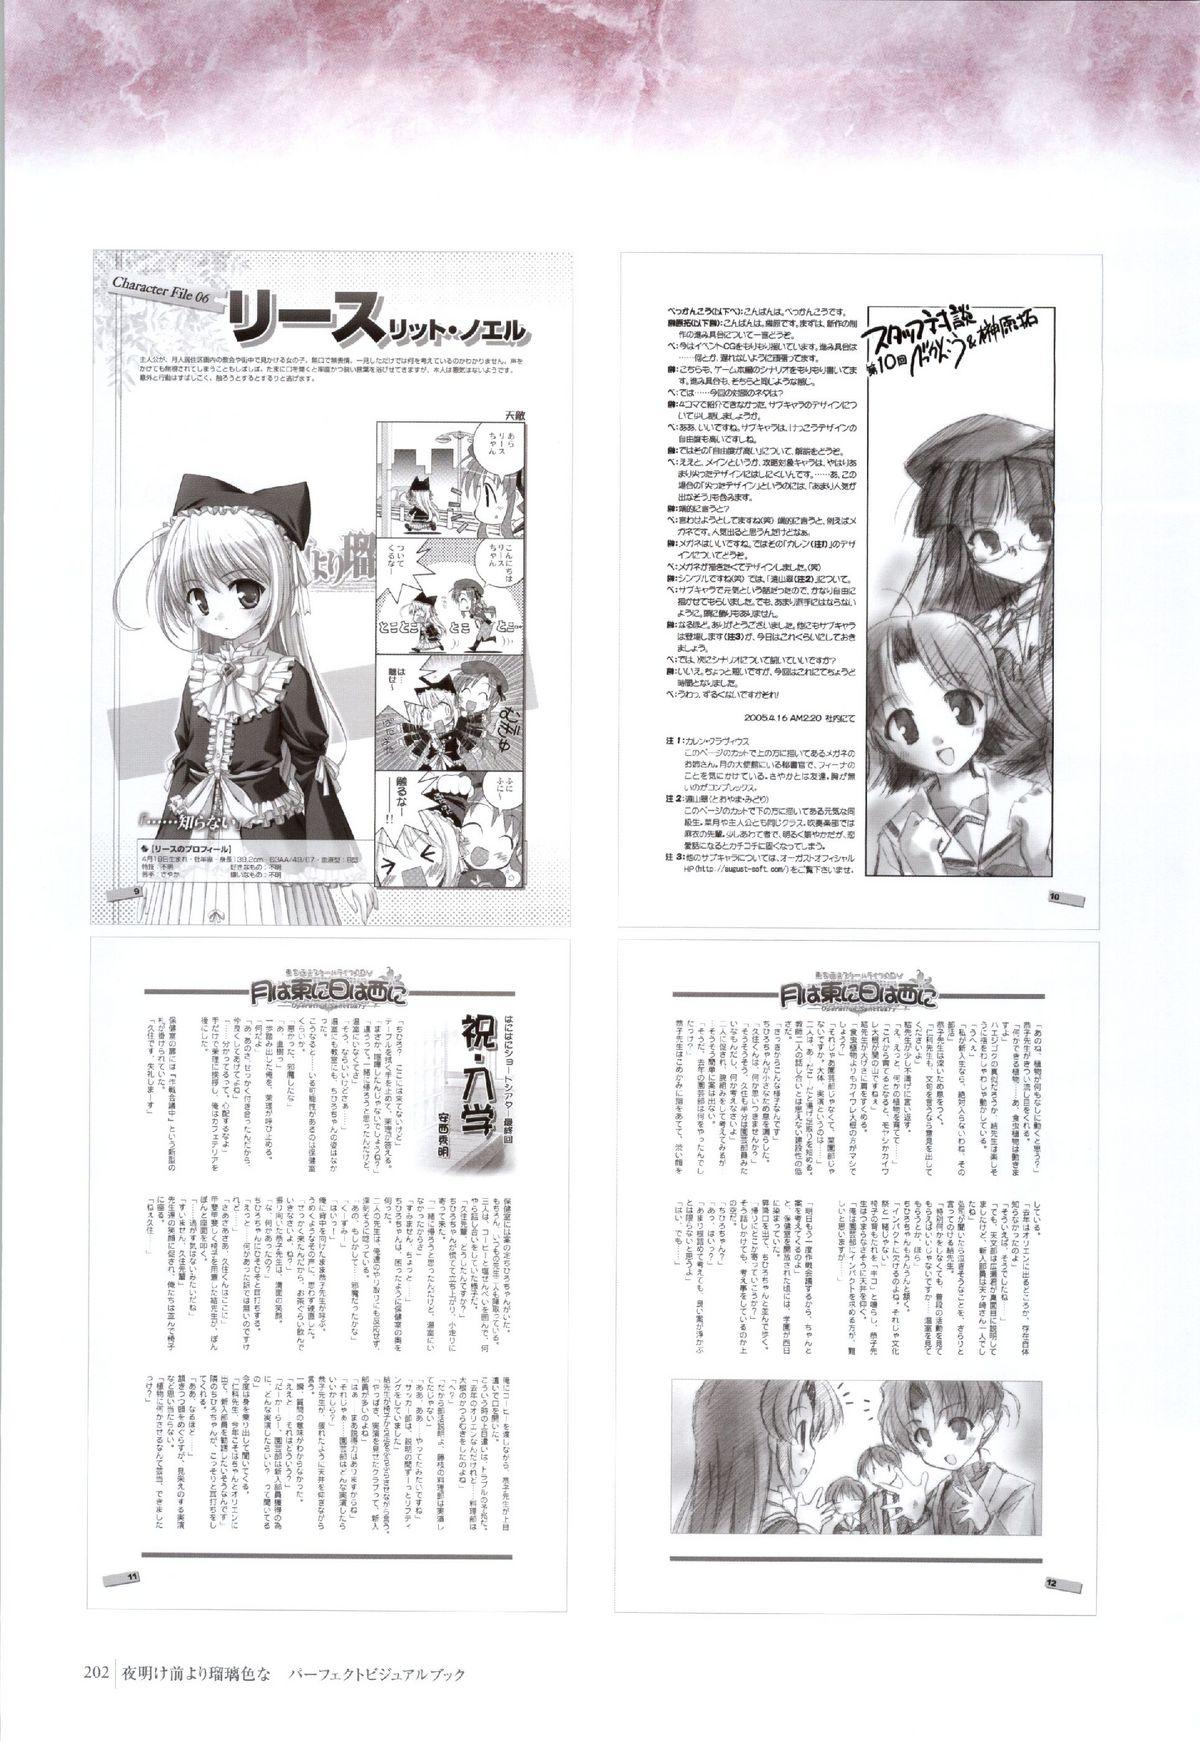 Yoake Mae Yori Ruri Iro Na ( Crescent Love ) Perfect Visual Book 198